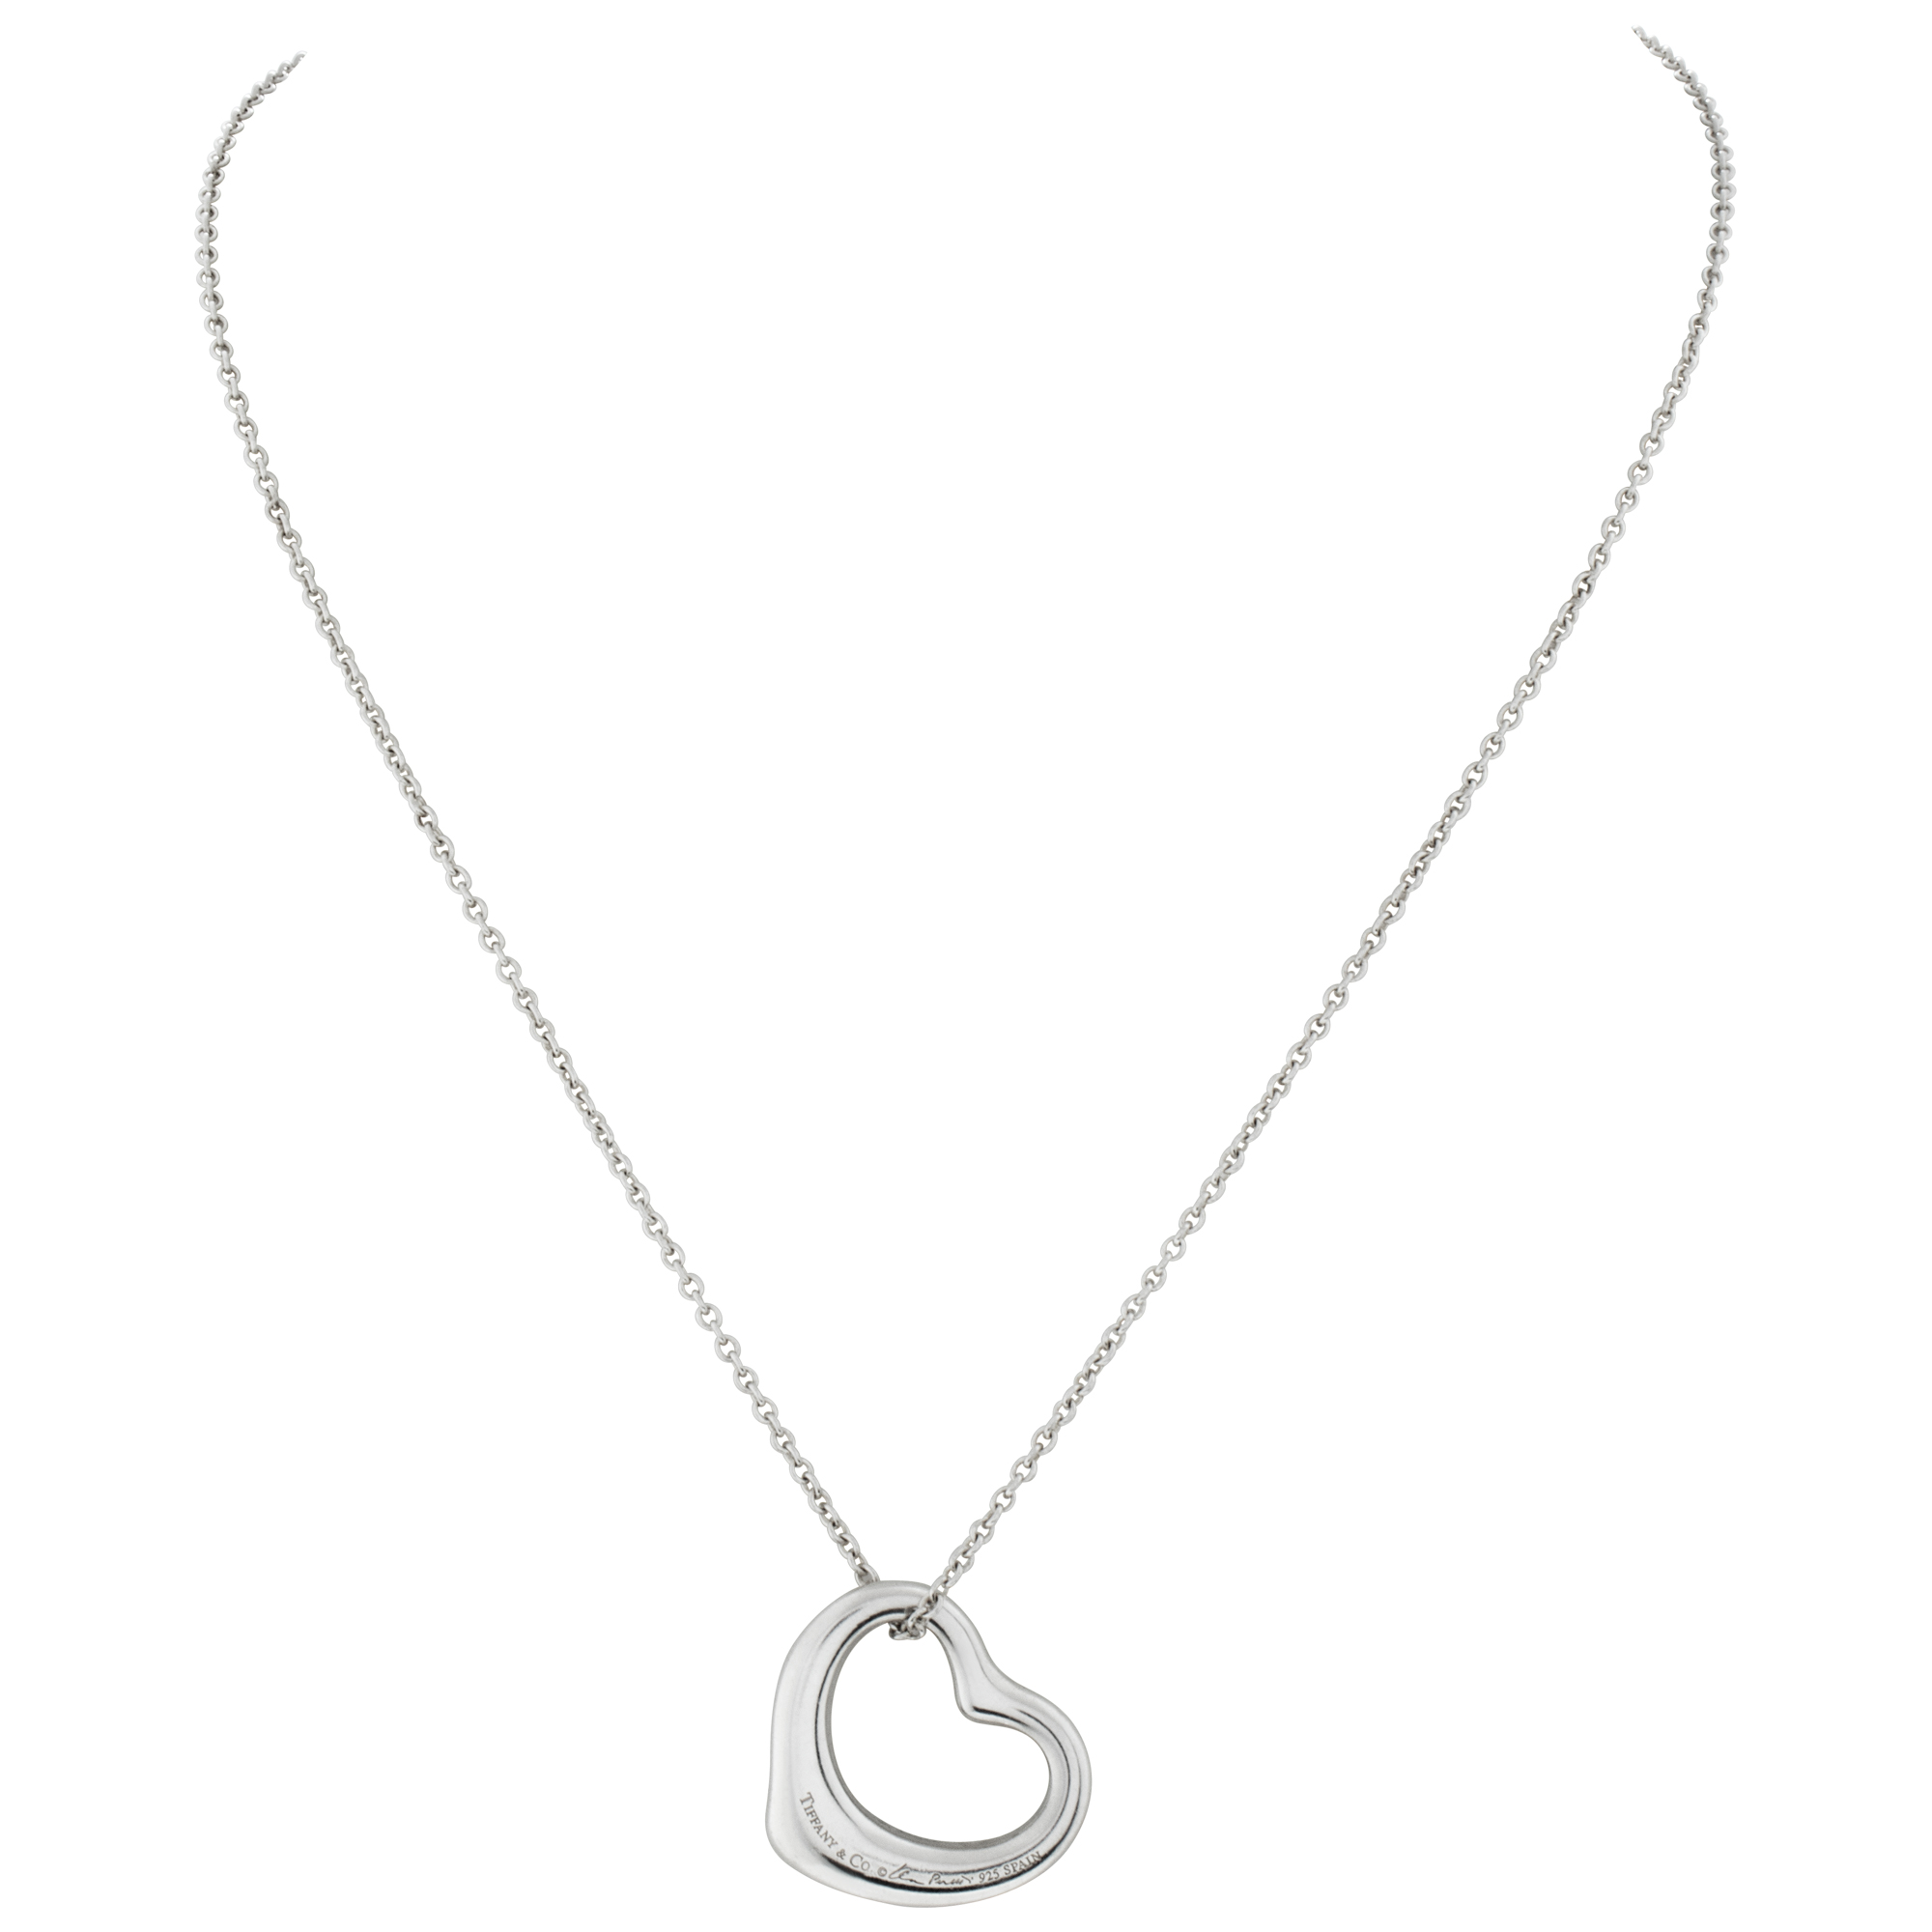 Tiffany & Co. Elsa Perreti Open Heart Pendant Necklace in Sterling Silver image 1